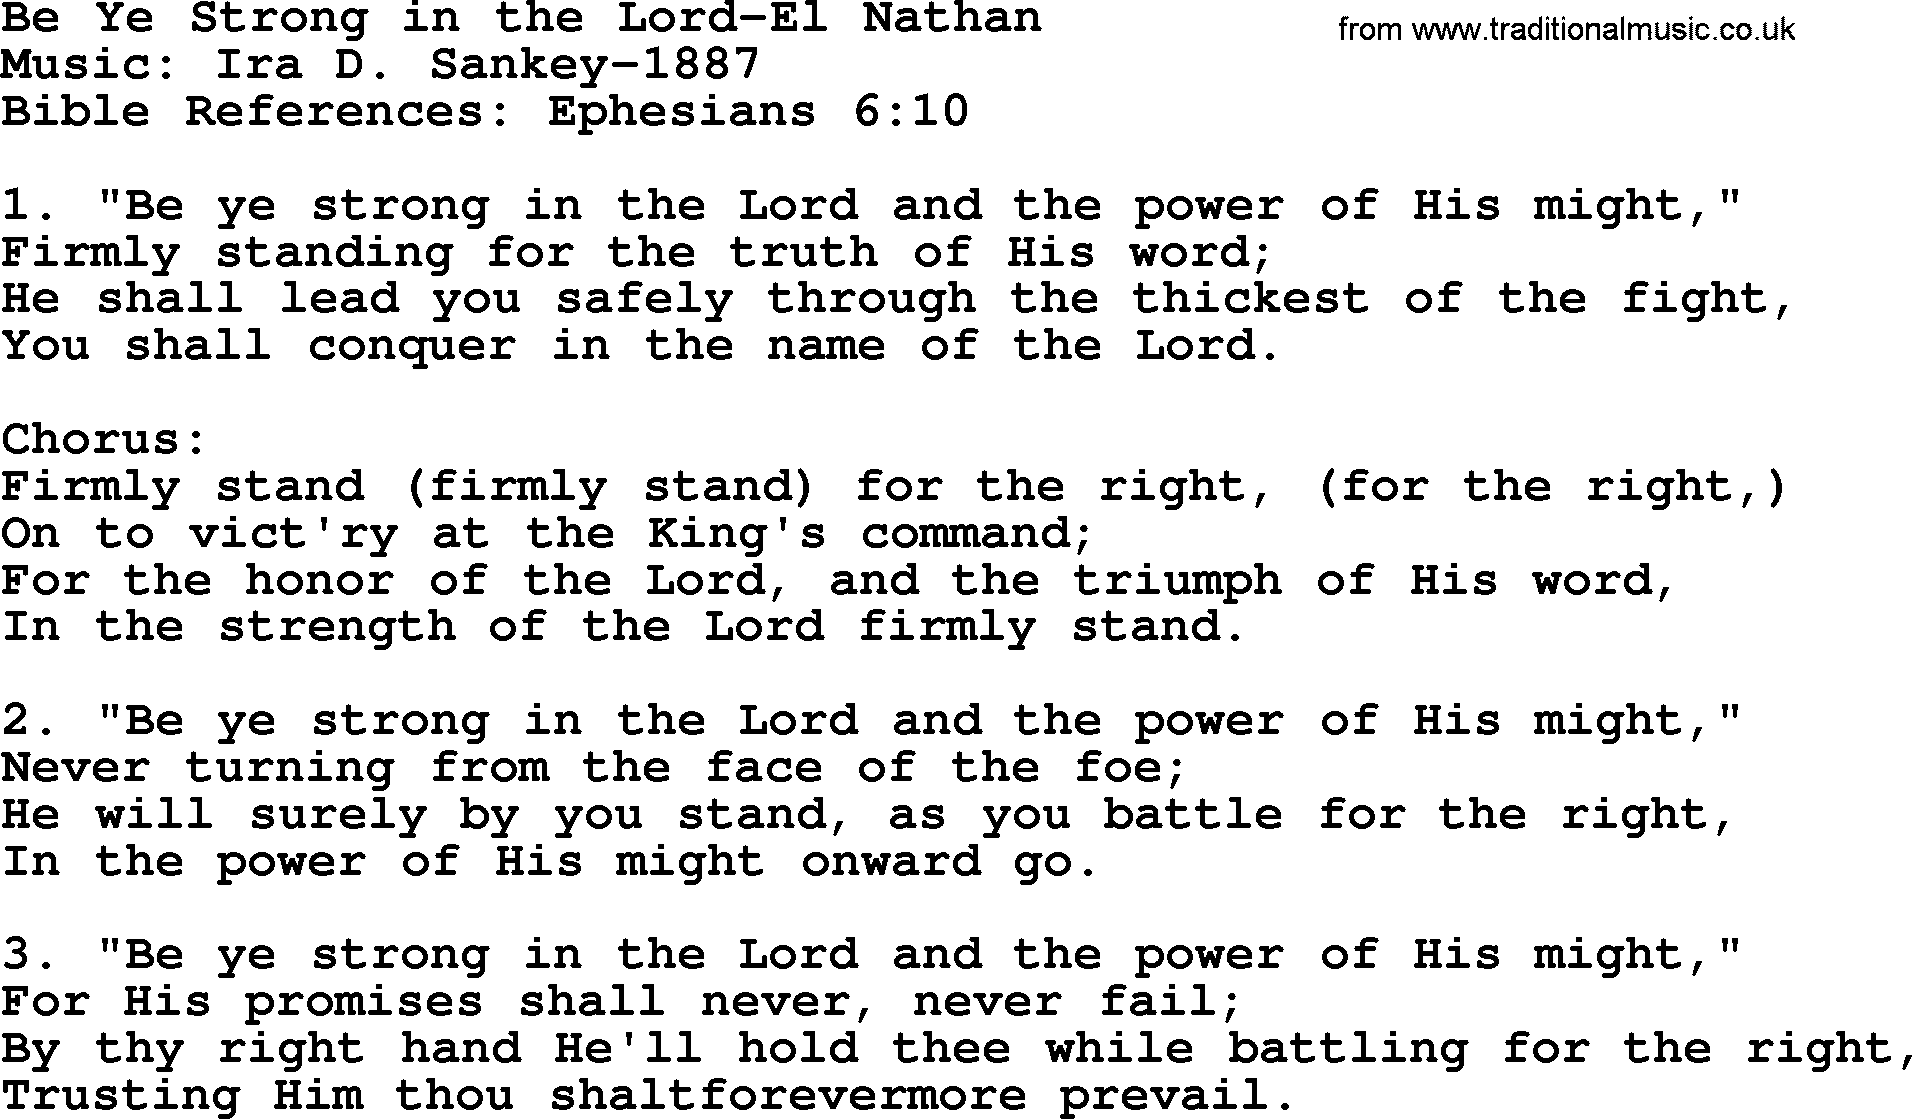 Ira Sankey hymn: Be Ye Strong in the Lord-Ira Sankey, lyrics